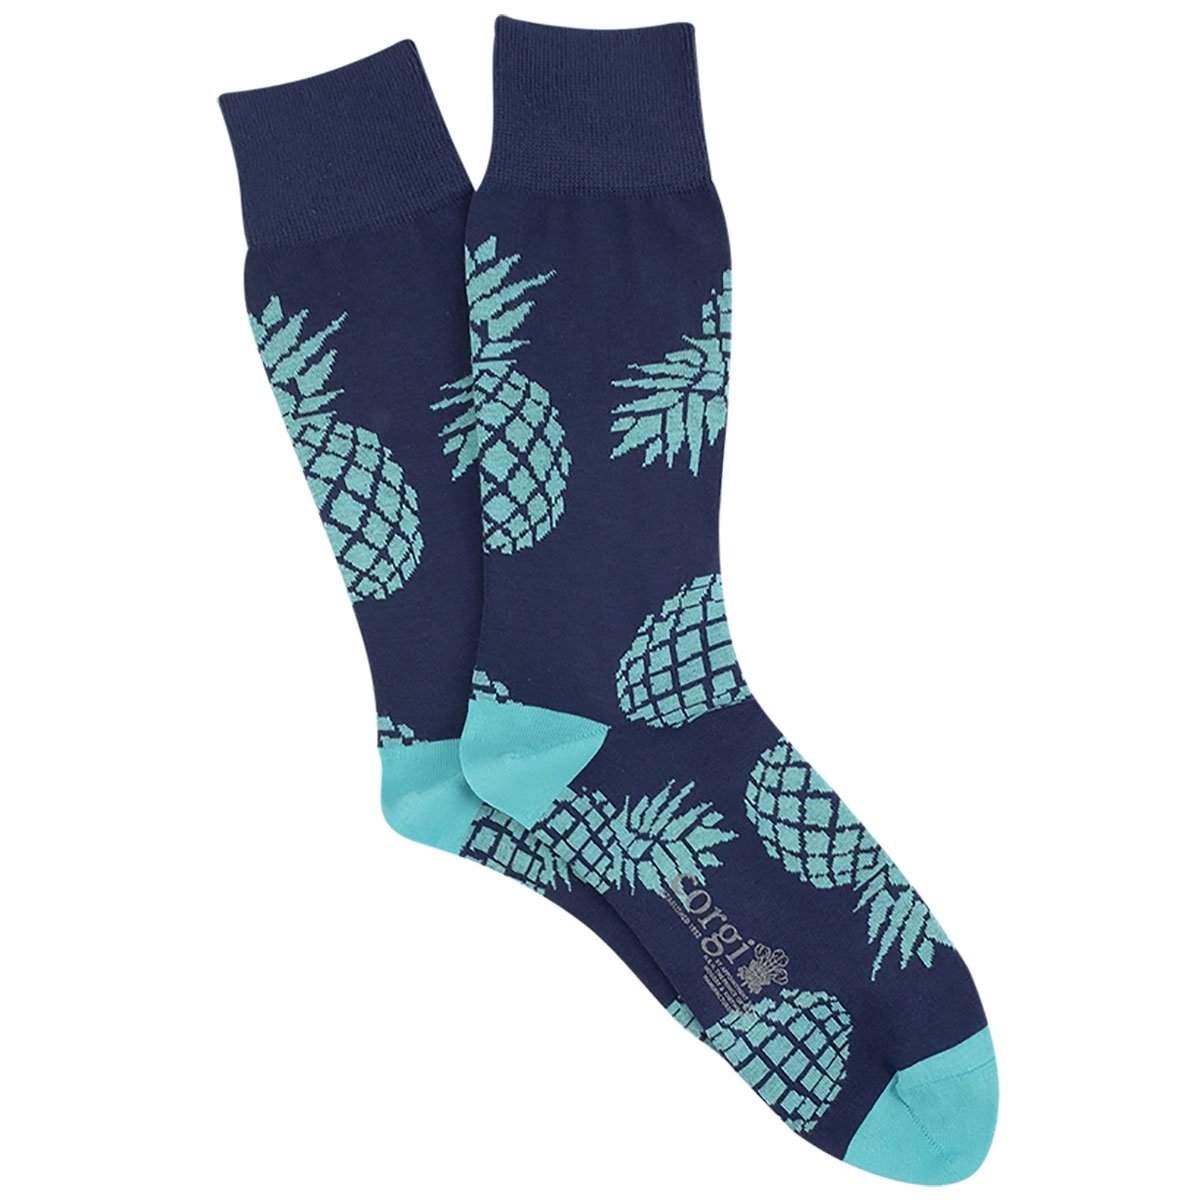 Blue Pineapple Motif Cotton Socks  Robert Old   